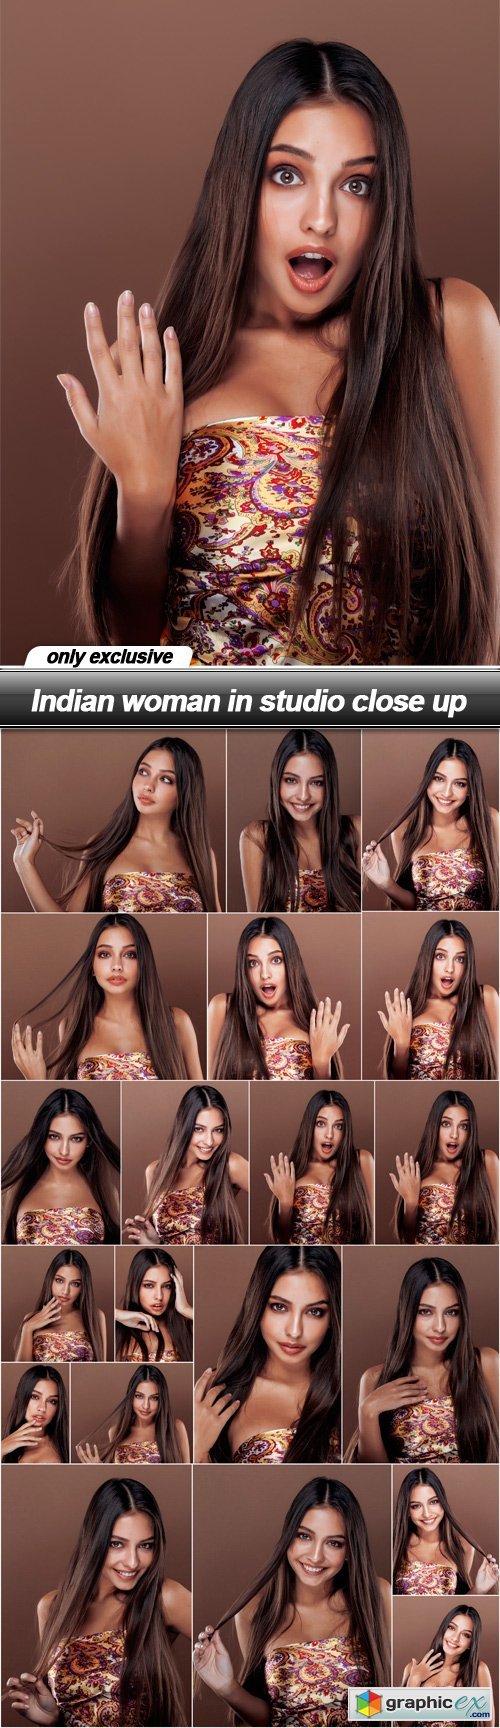 Indian woman in studio close up - 20 UHQ JPEG